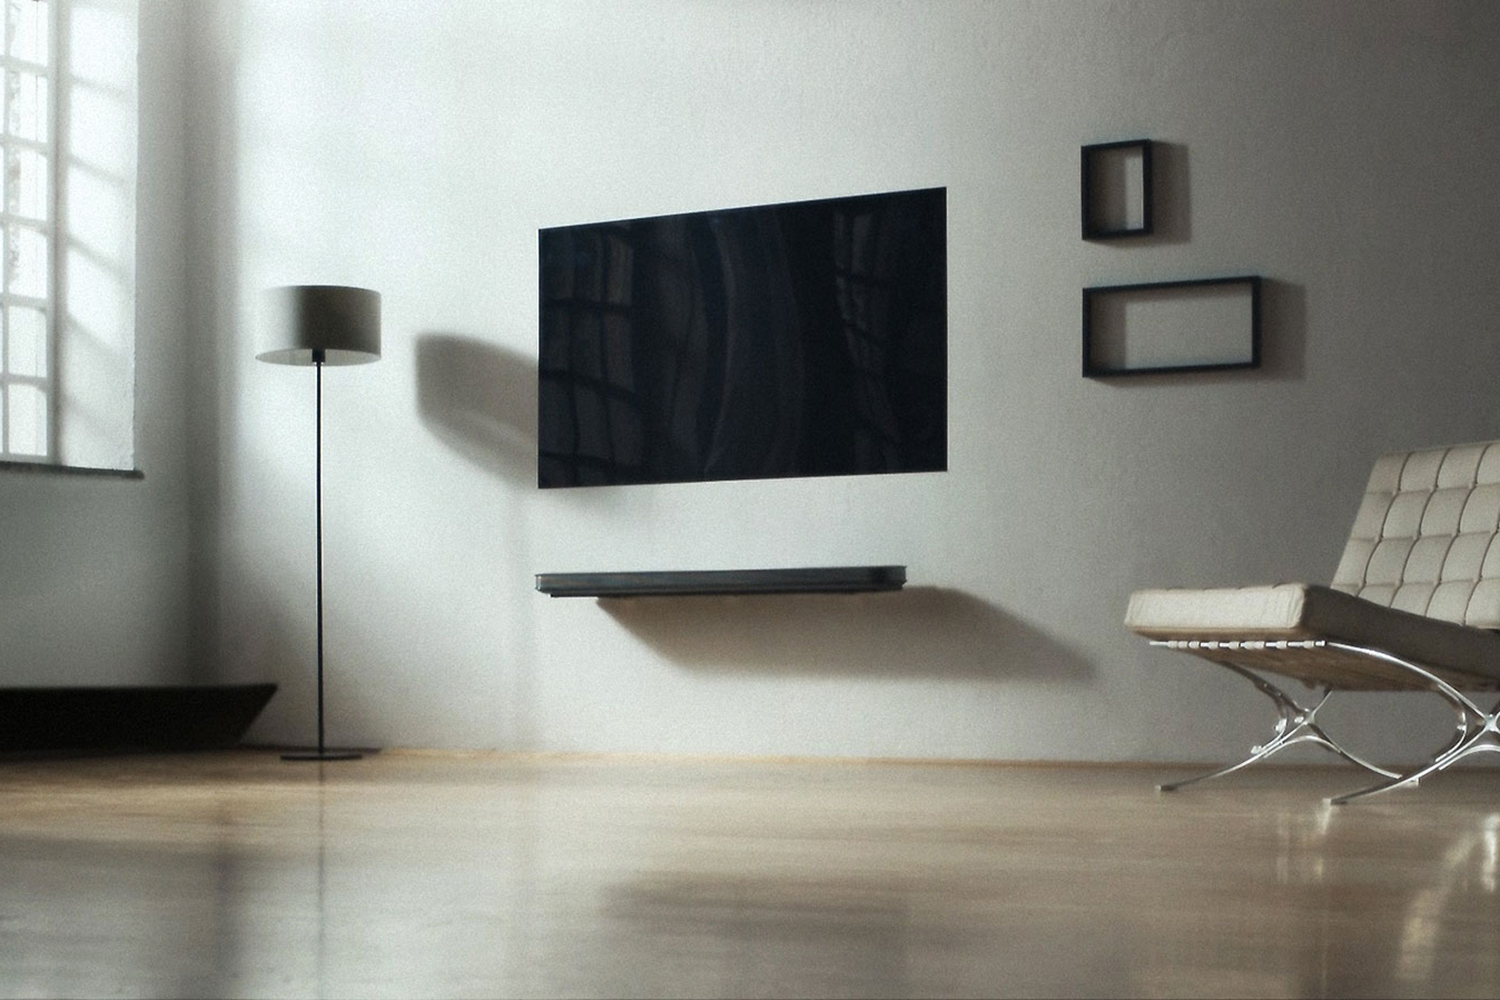 LG's 77-inch Wallpaper OLED TV W7 Series